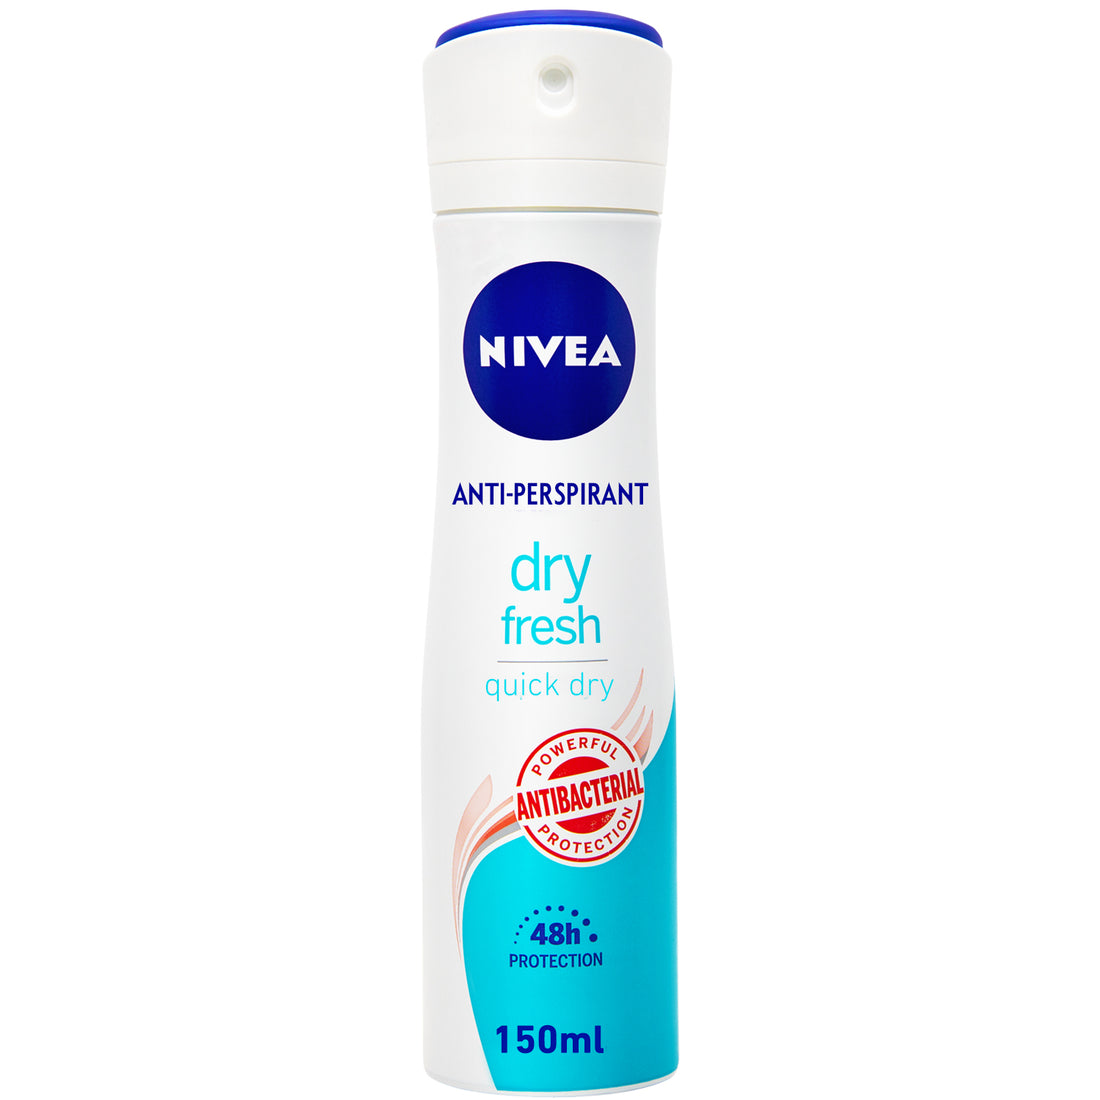 Nivea Dry Fresh, Antiperspirant for Women, Antibacterial Protection, Spray 150ml